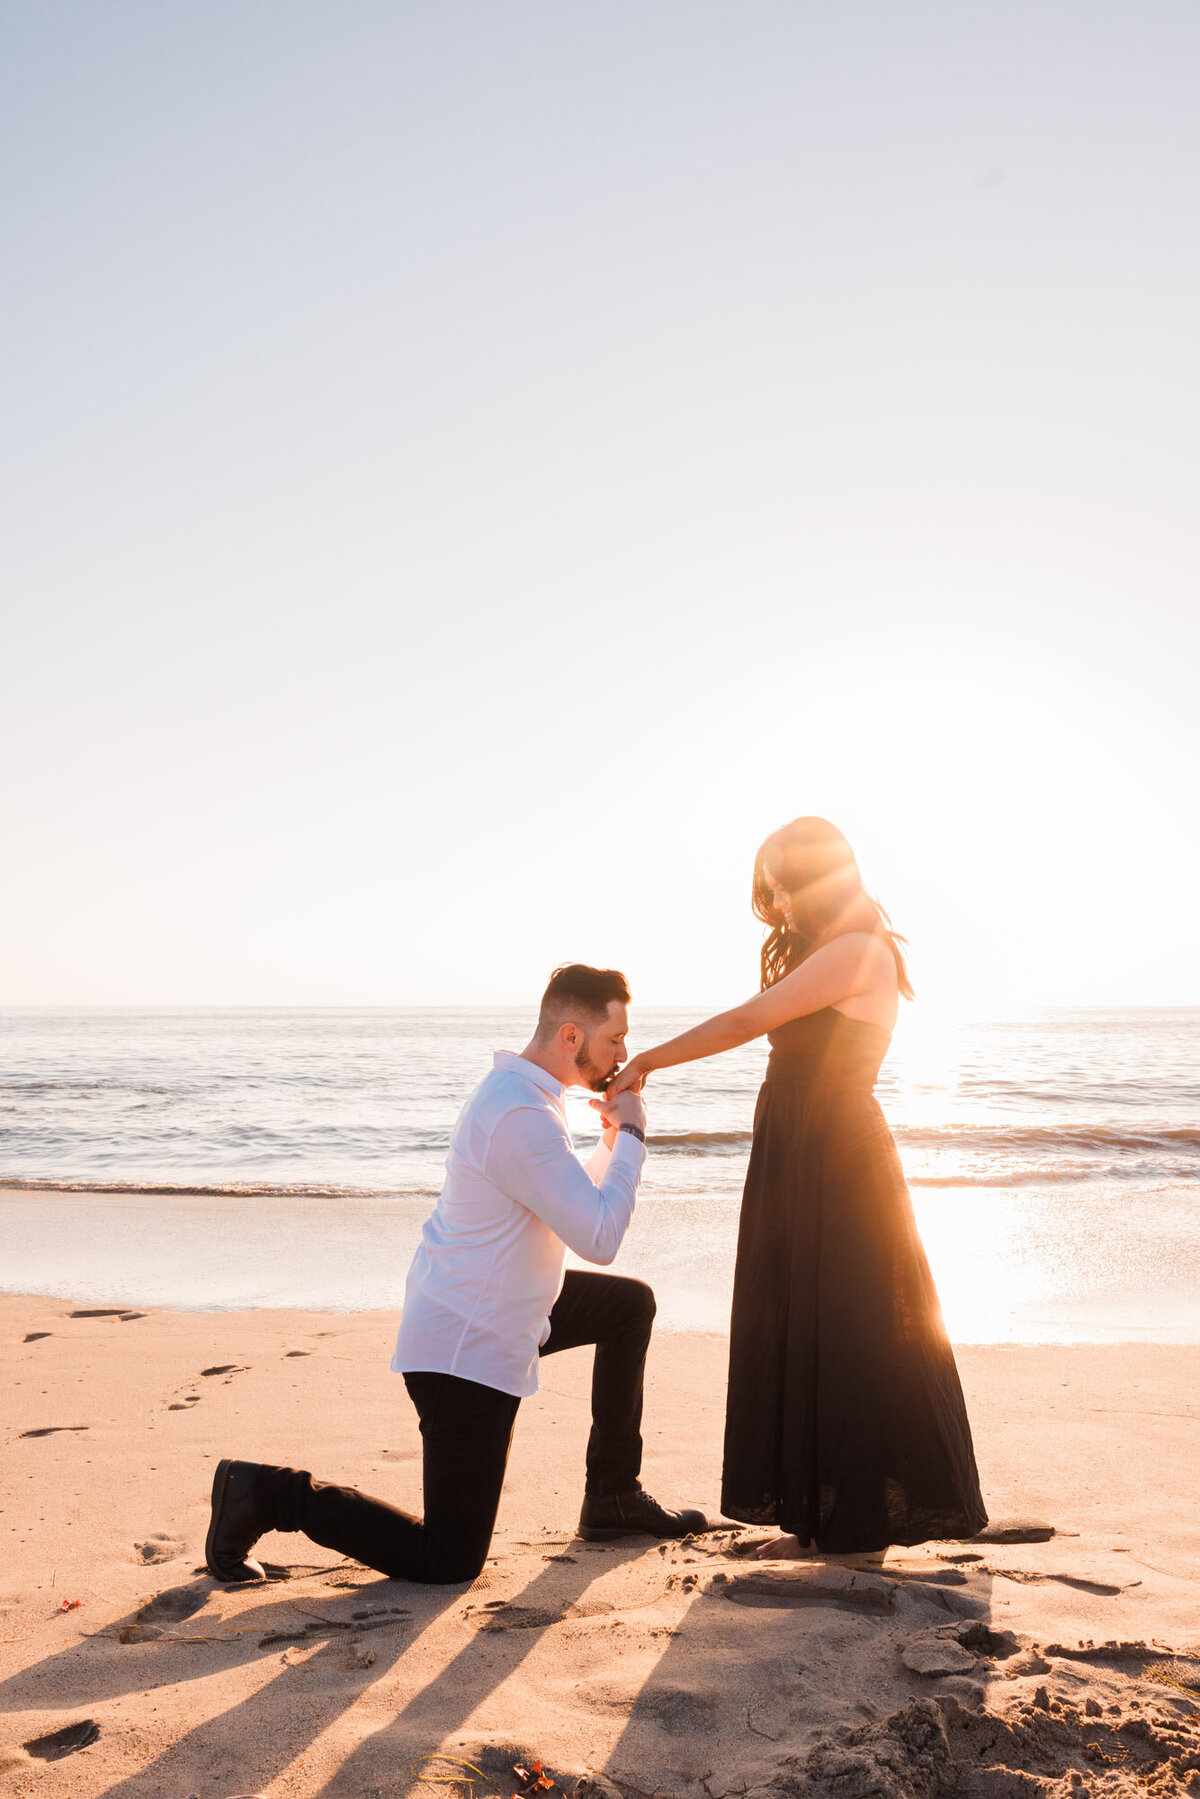 Kyle Woolum + Stephanie-Proposal Engagement-Half Moon Bay-Dunes Beach-San Francisco Wedding Photographer-San Francisco Photographer-Half Moon Bay Photographer-Emily Pillon Photography-S-092323-65